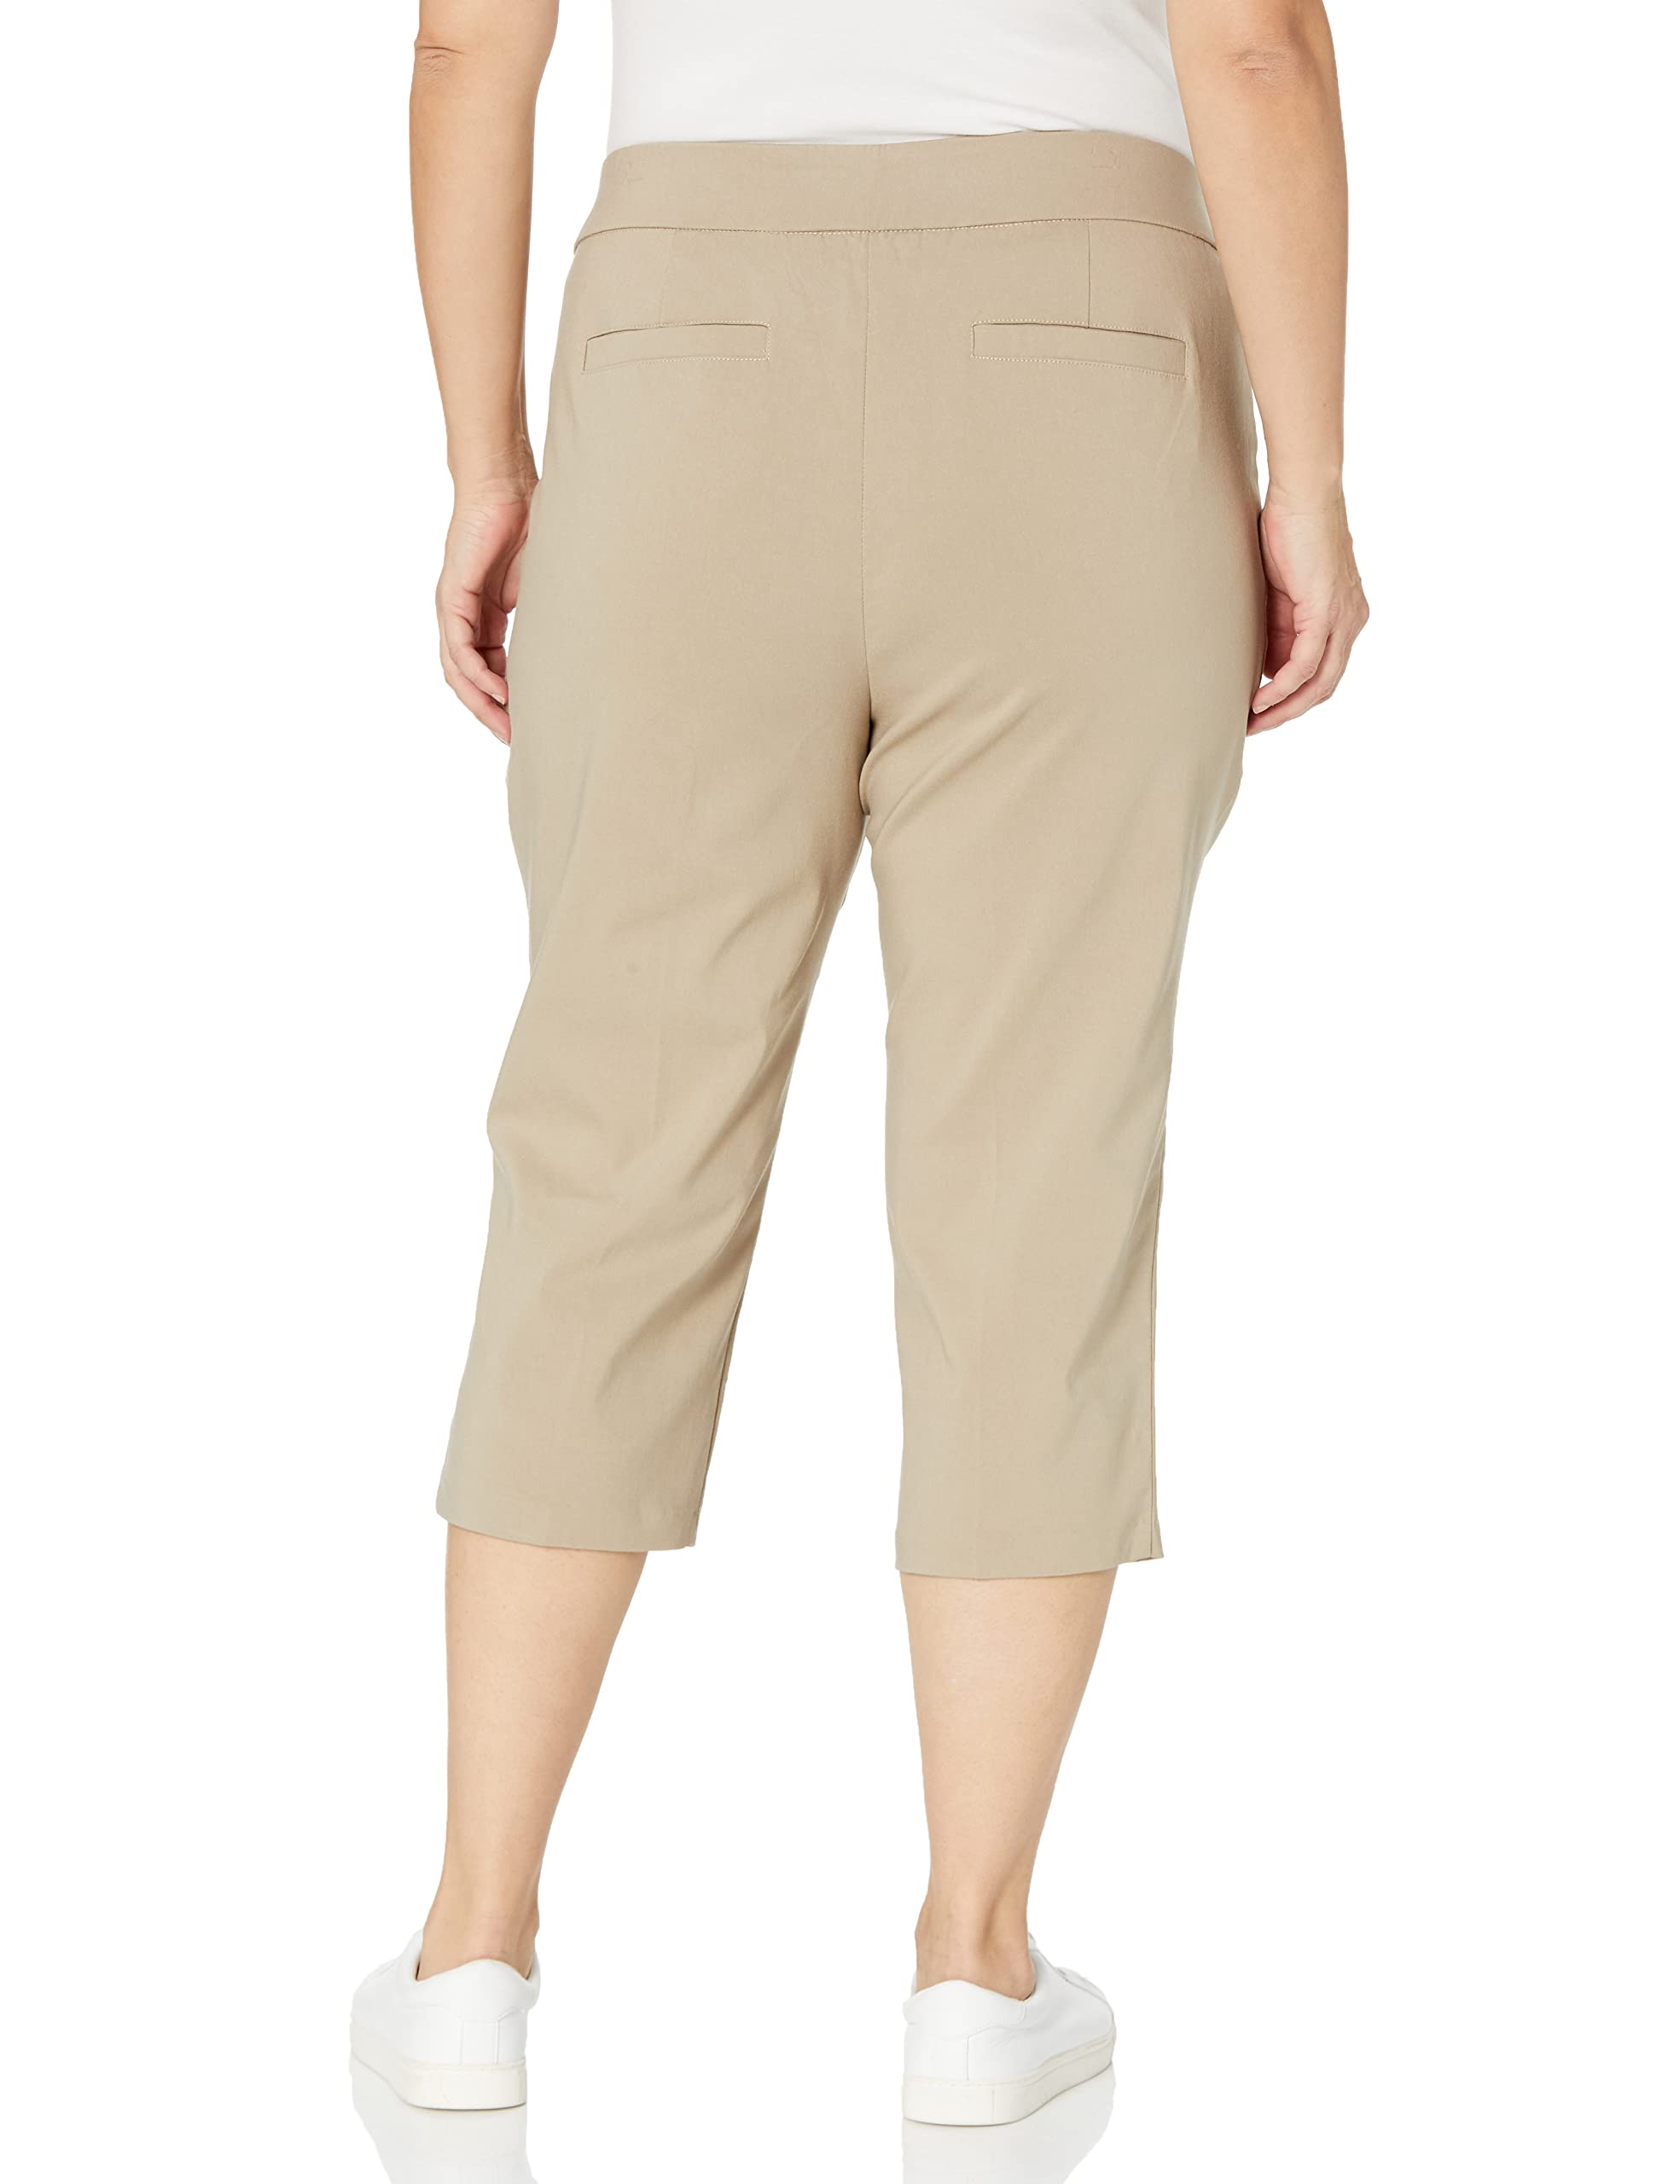 Briggs New York Women's Plus-Size Pull on Capri L Pocket